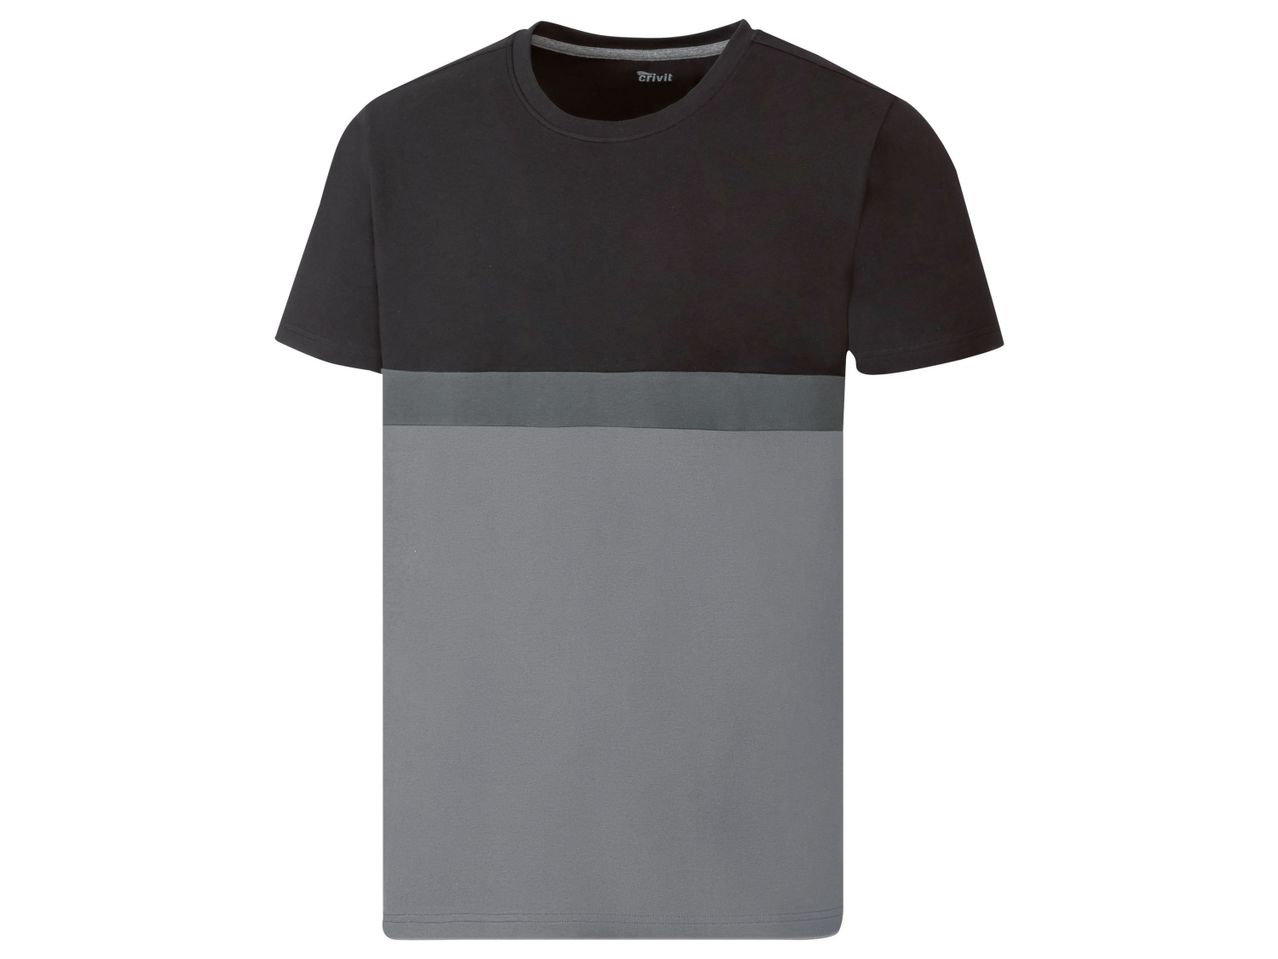 T-shirt sportiva da uomo , prezzo 4.99 EUR 
T-shirt sportiva da uomo Misure: S-XL ...